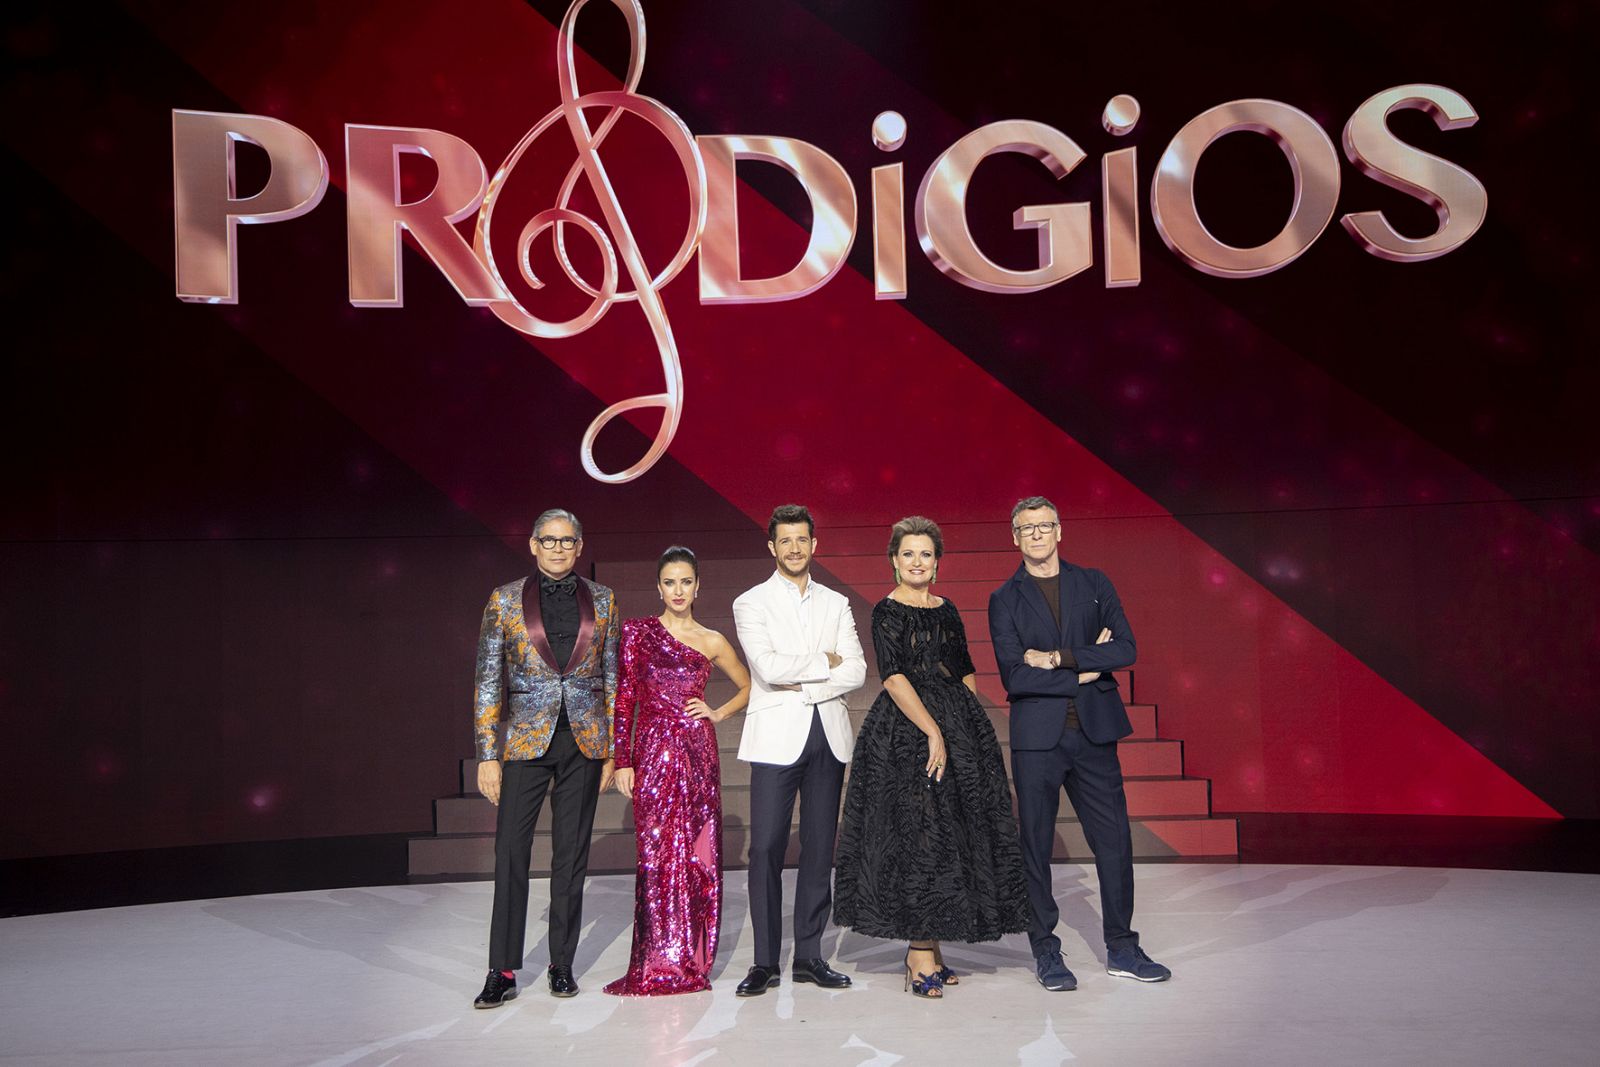 Boris Izaguirre, Paula Prendes, Andrés Salado, Ainhoa Arteta y Nacho Duato en 'Prodigios 2'